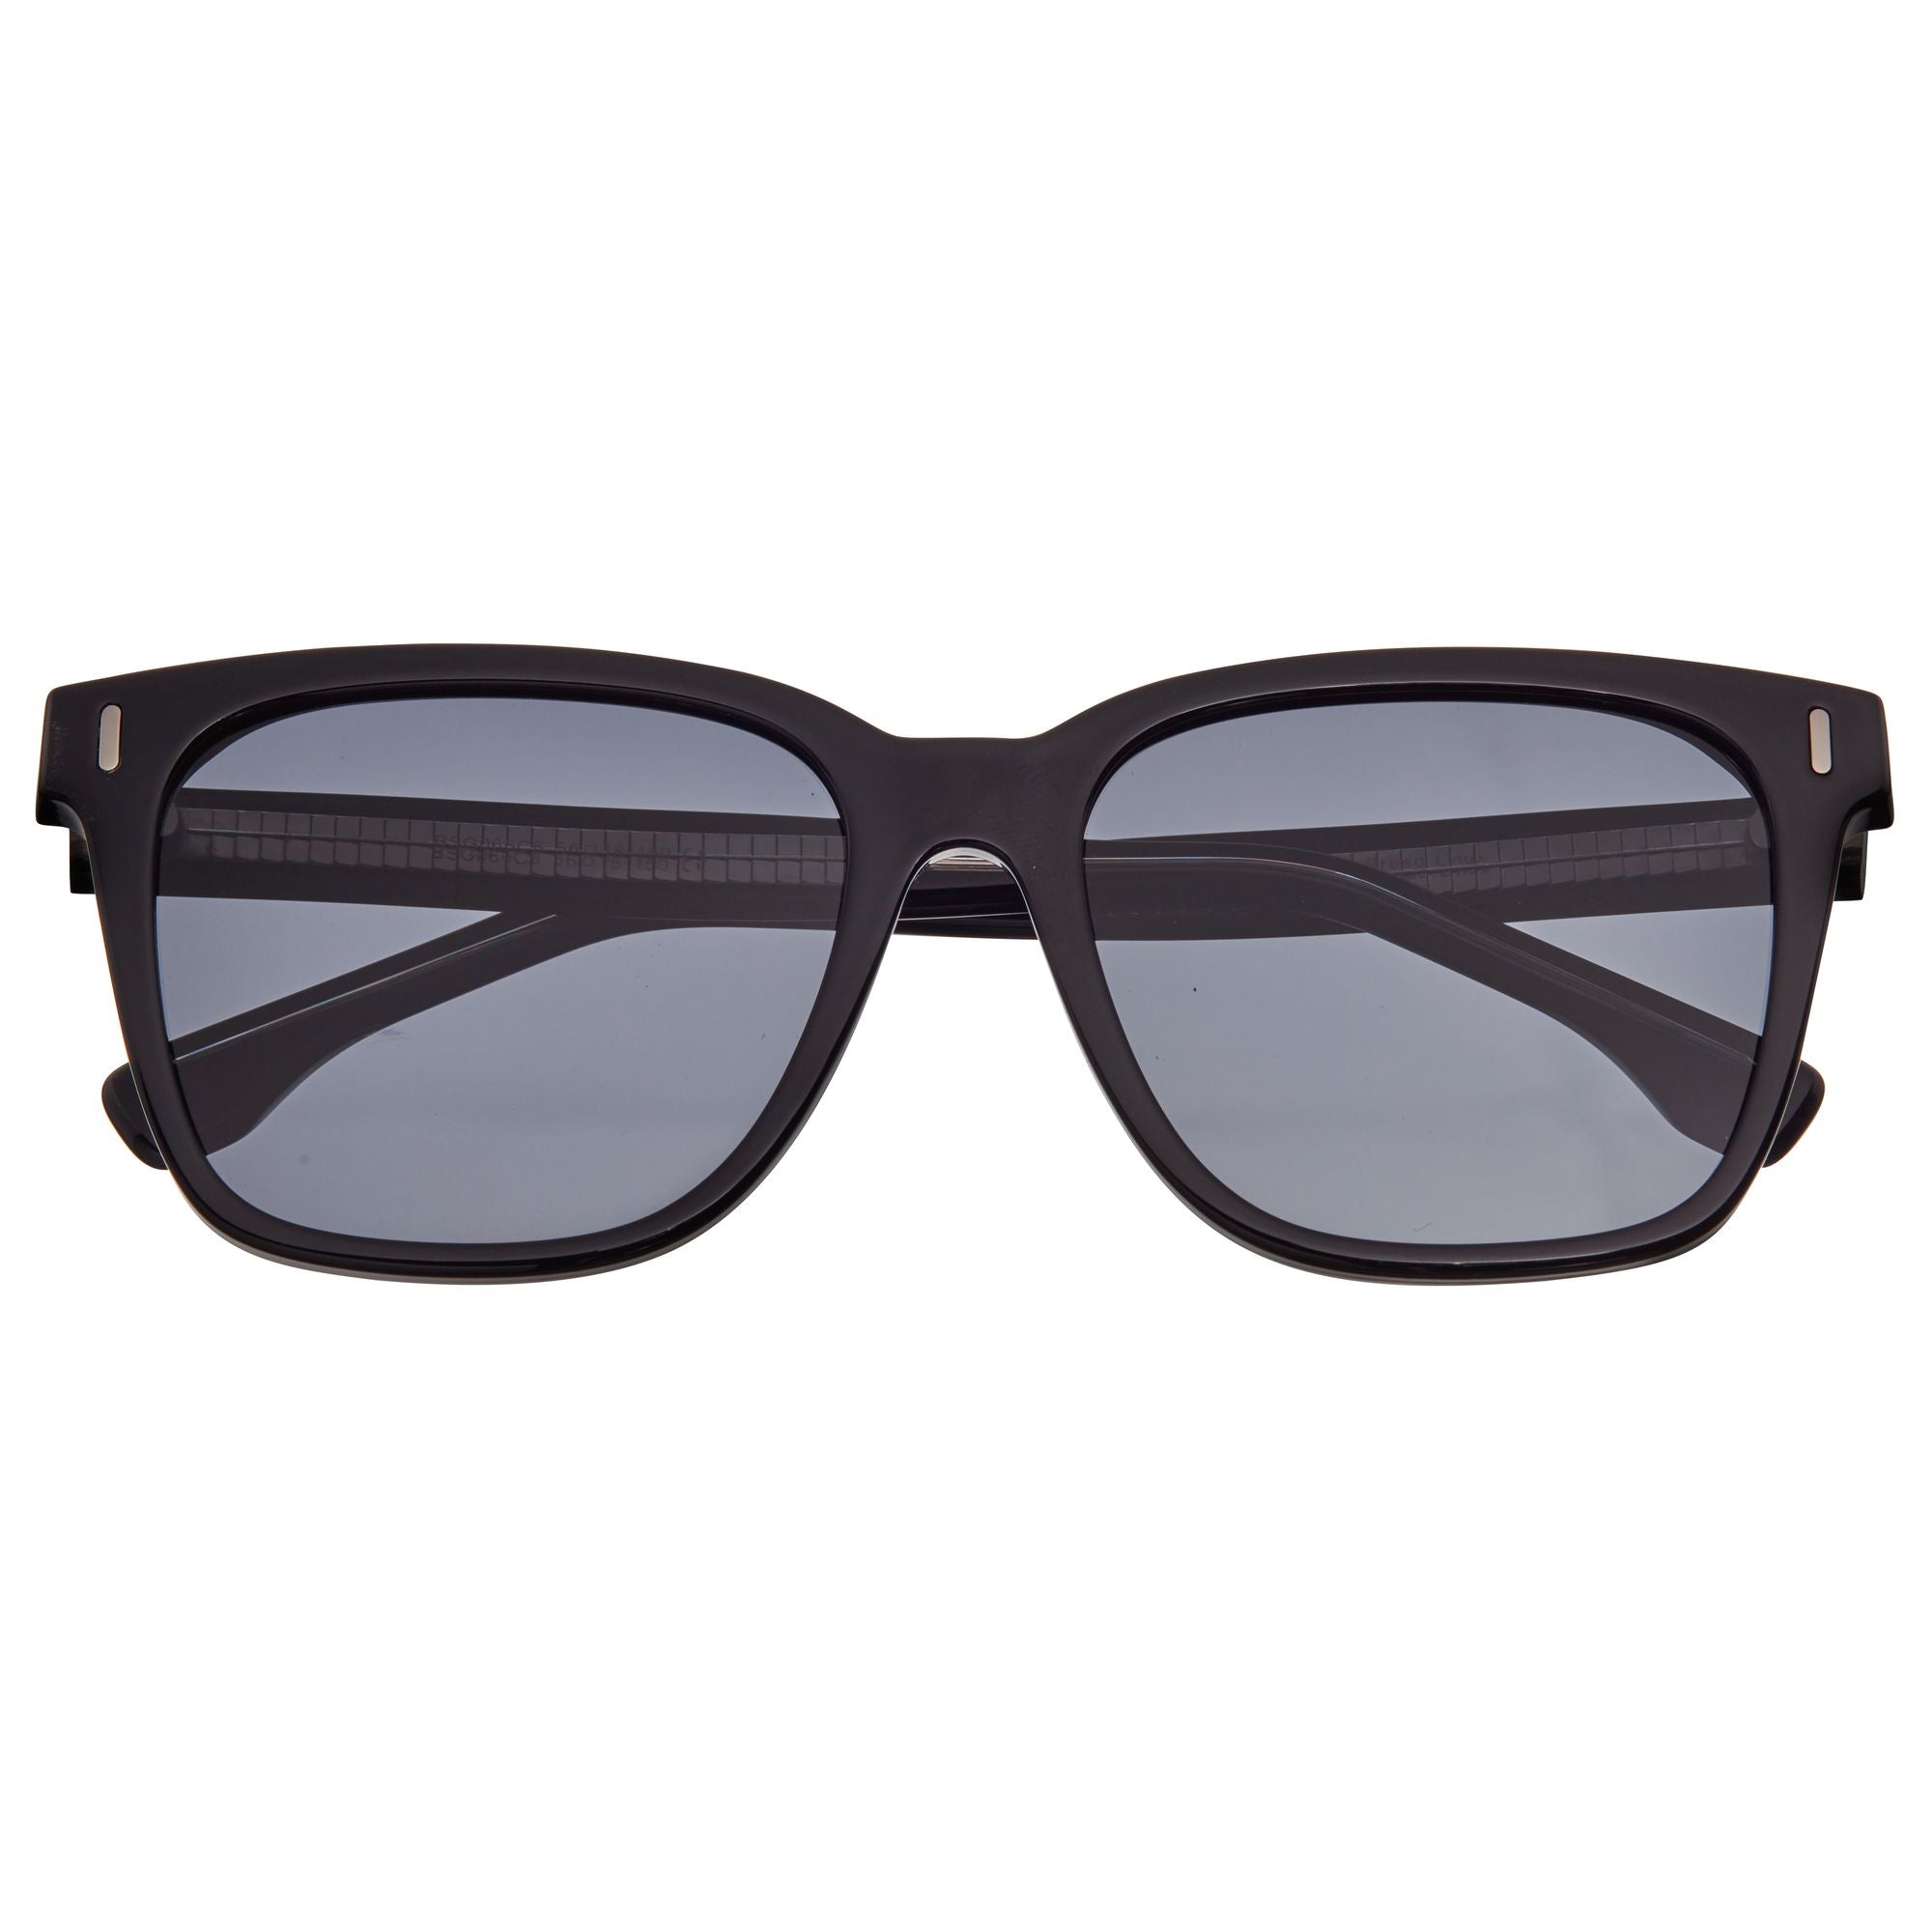 Breed Linux Polarized Sunglasses - Black/Black - BSG066C6